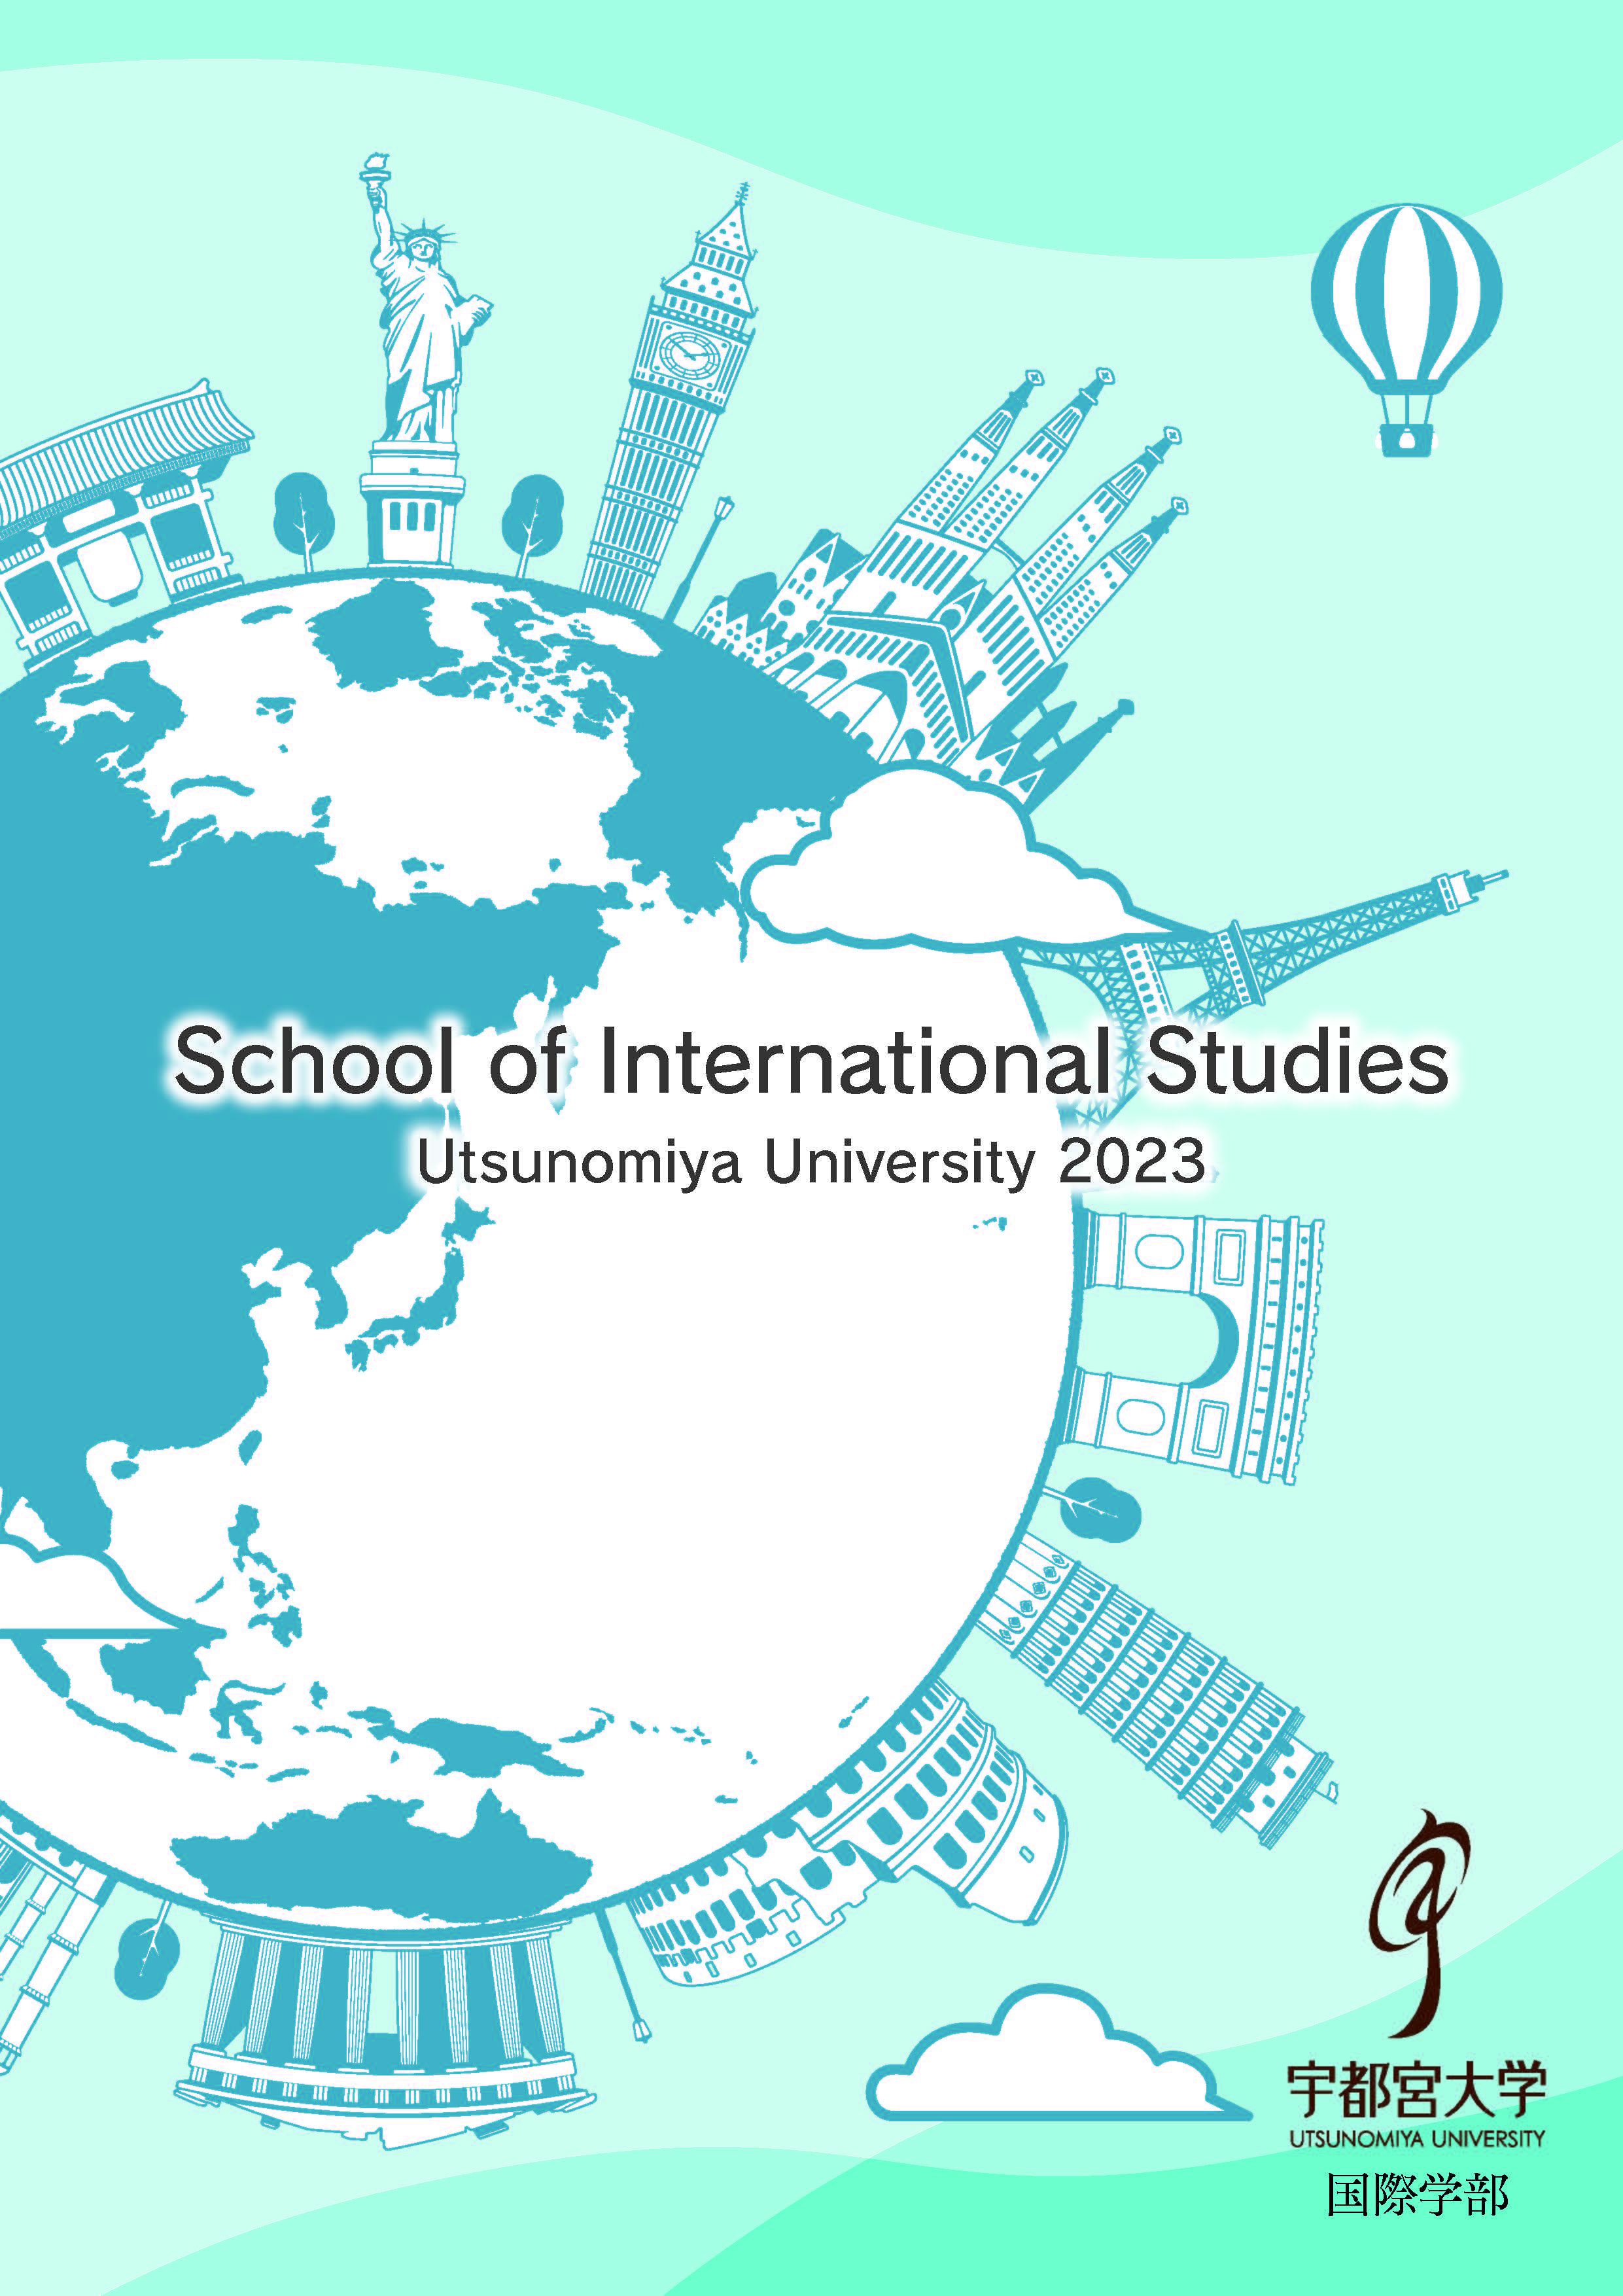 Brochure of the School of International Studies